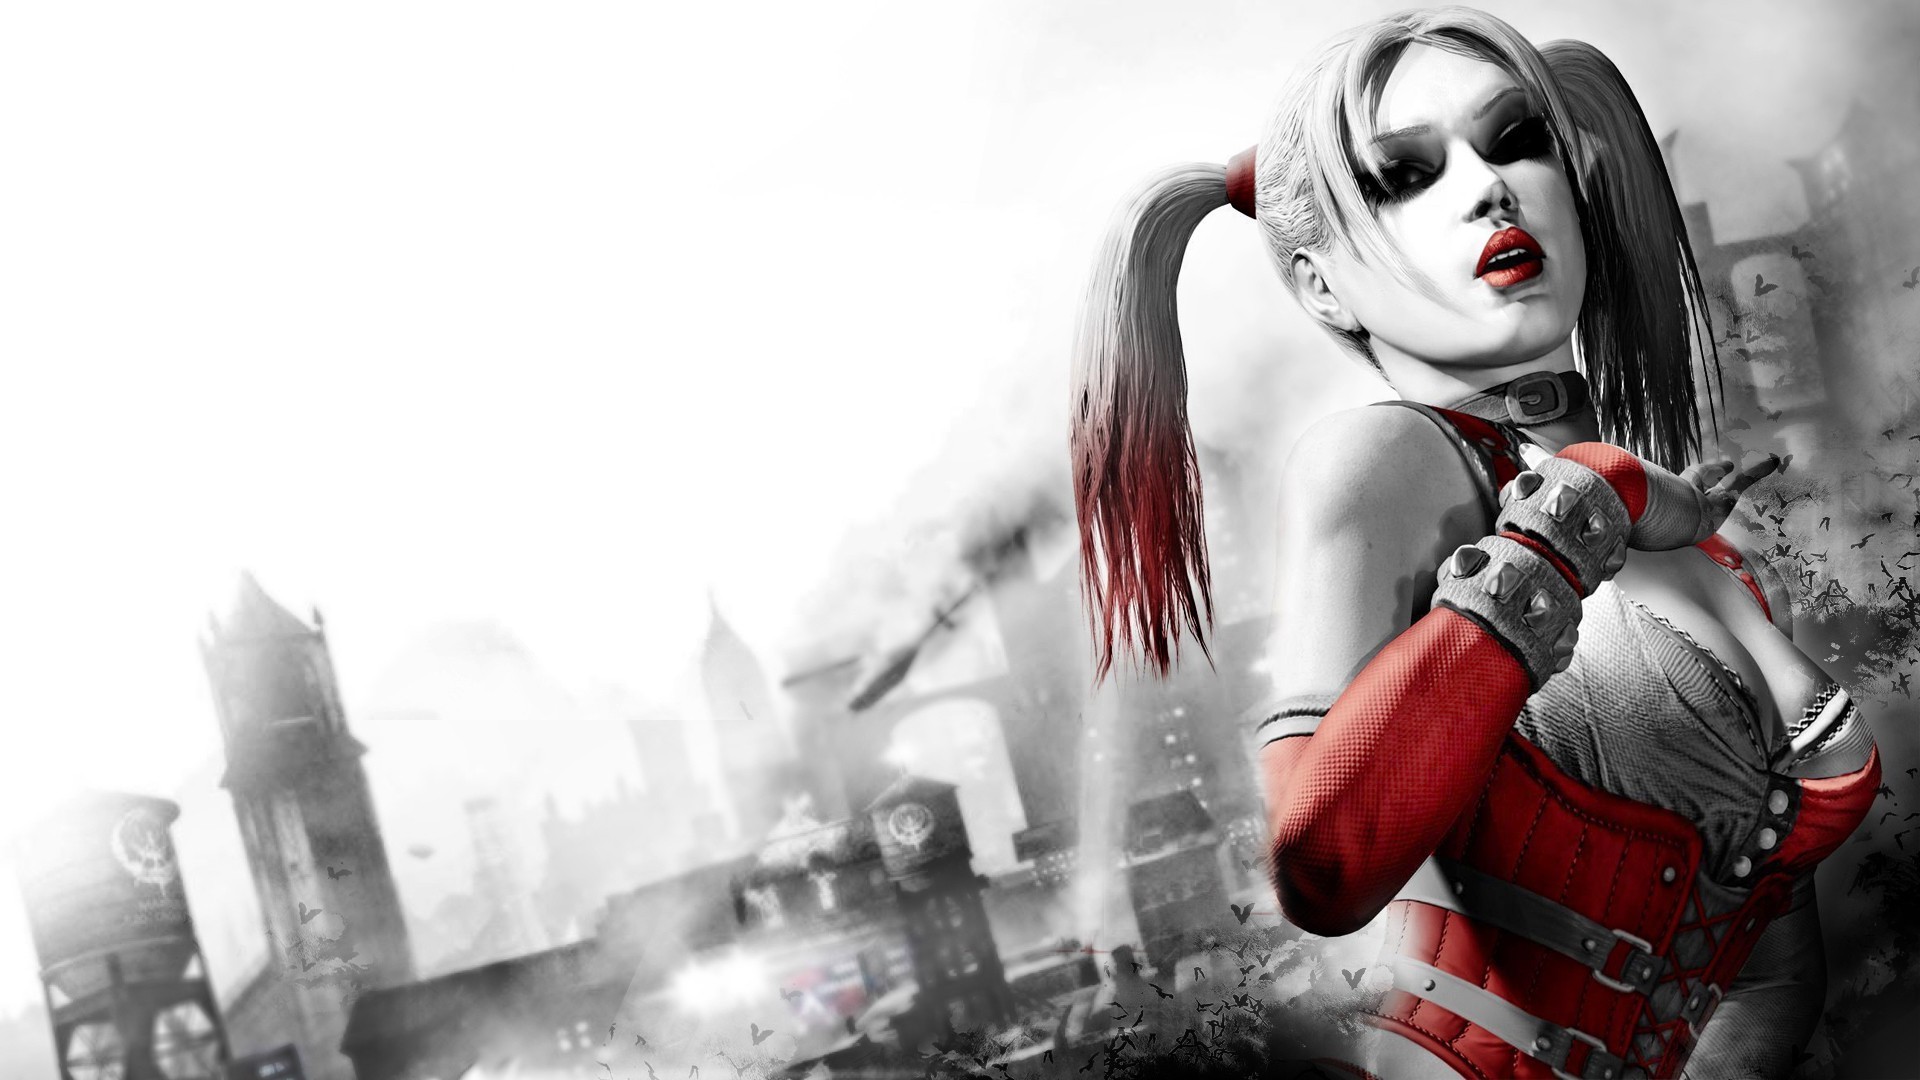  Harley  Quinn  and Joker  wallpaper    Download free 